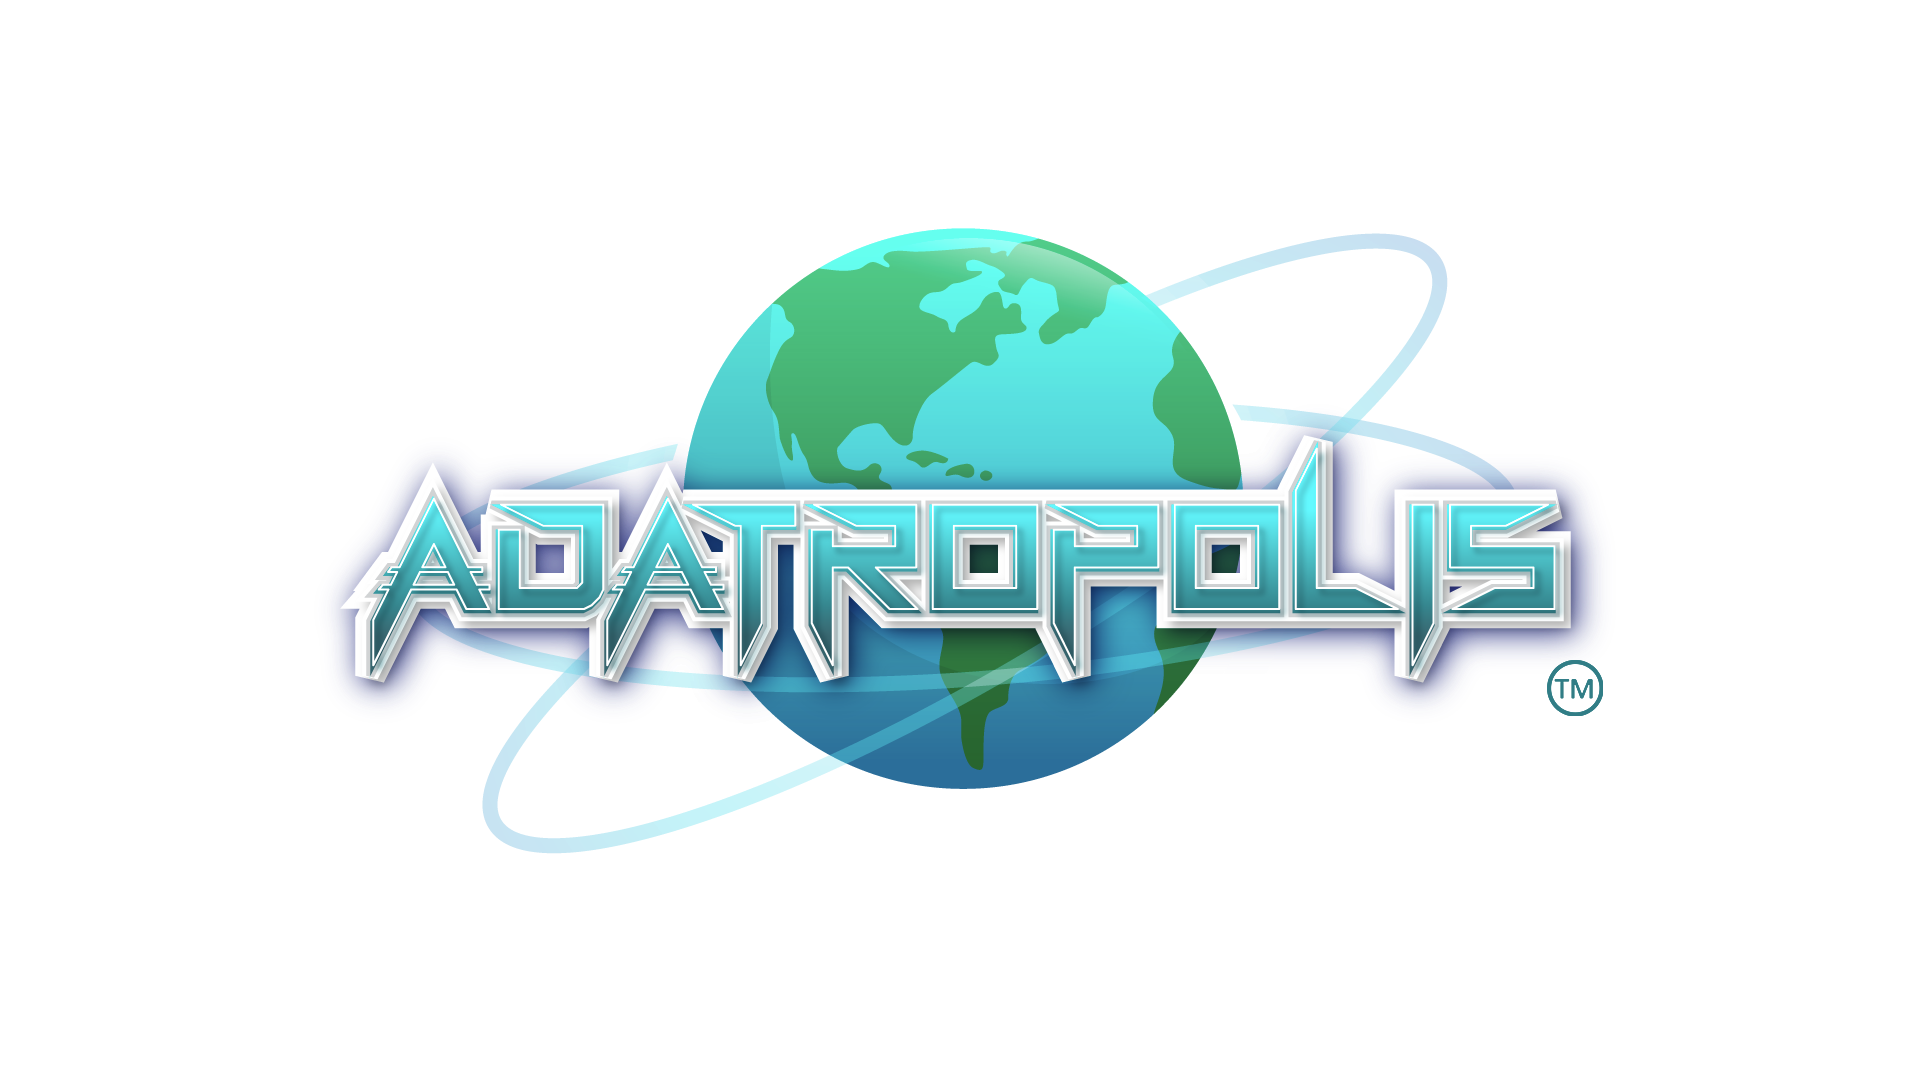 Adatropolis logo